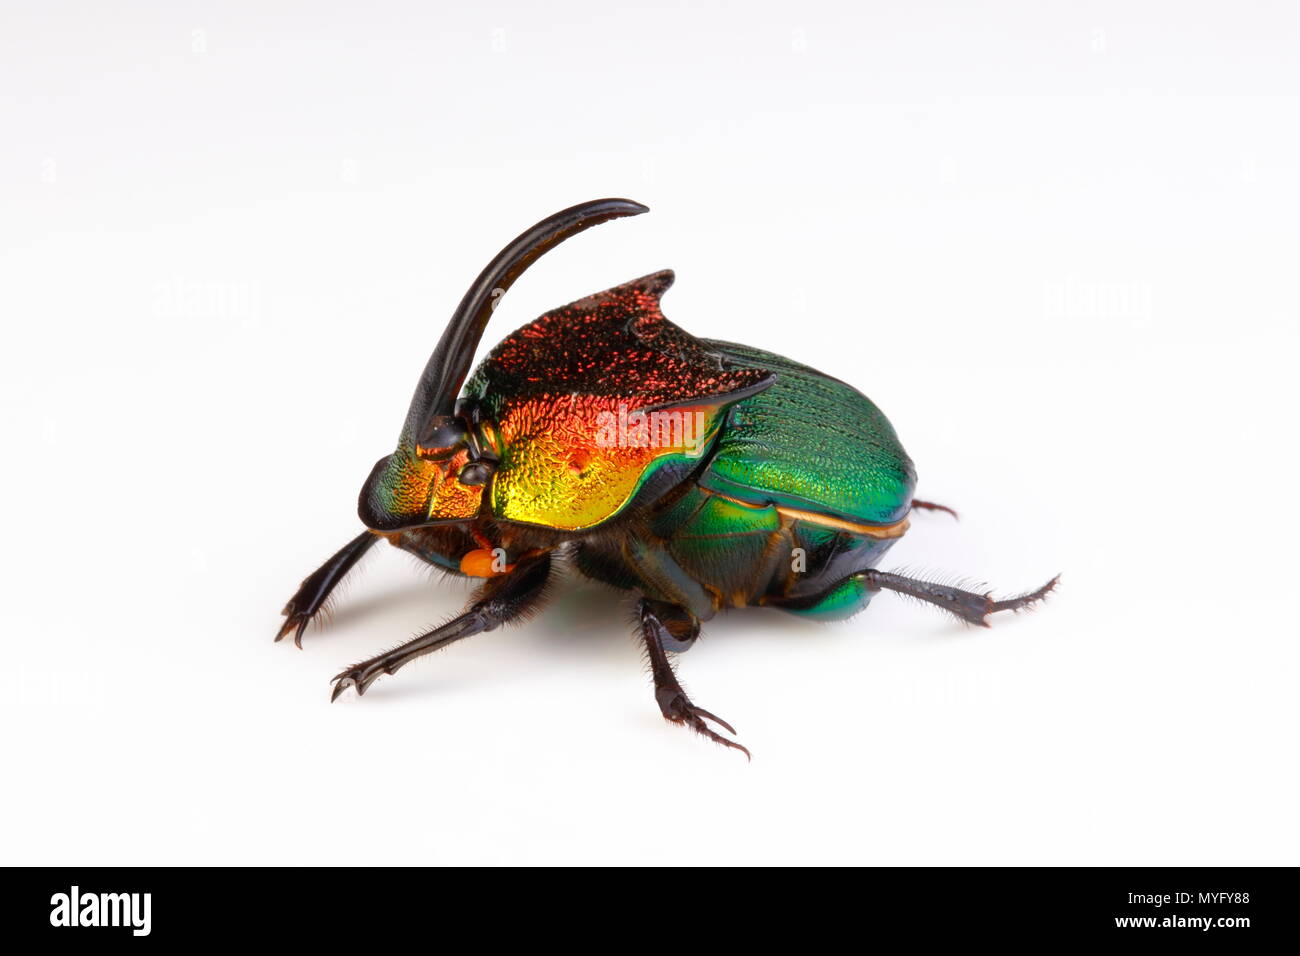 Un arcobaleno scarabeo scarabeo maschio, Phanaeus vindex, su uno sfondo bianco. Foto Stock